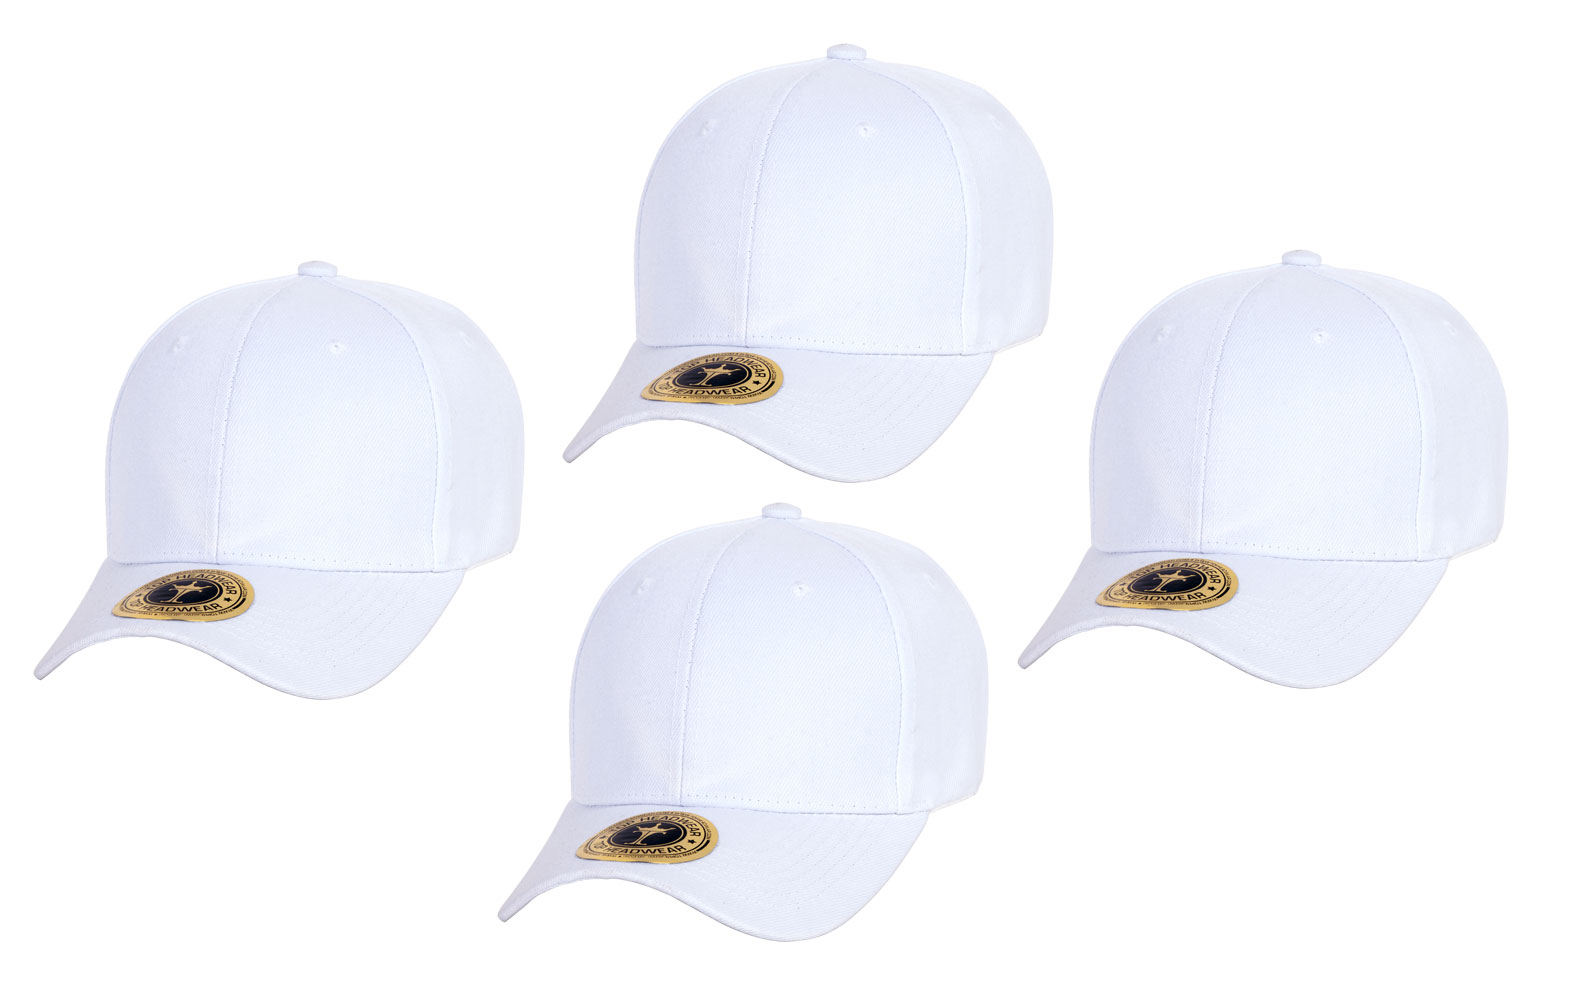 TOP HEADWEAR TopHeadwear Structured Adjustable Baseball Hat, White 4 pack